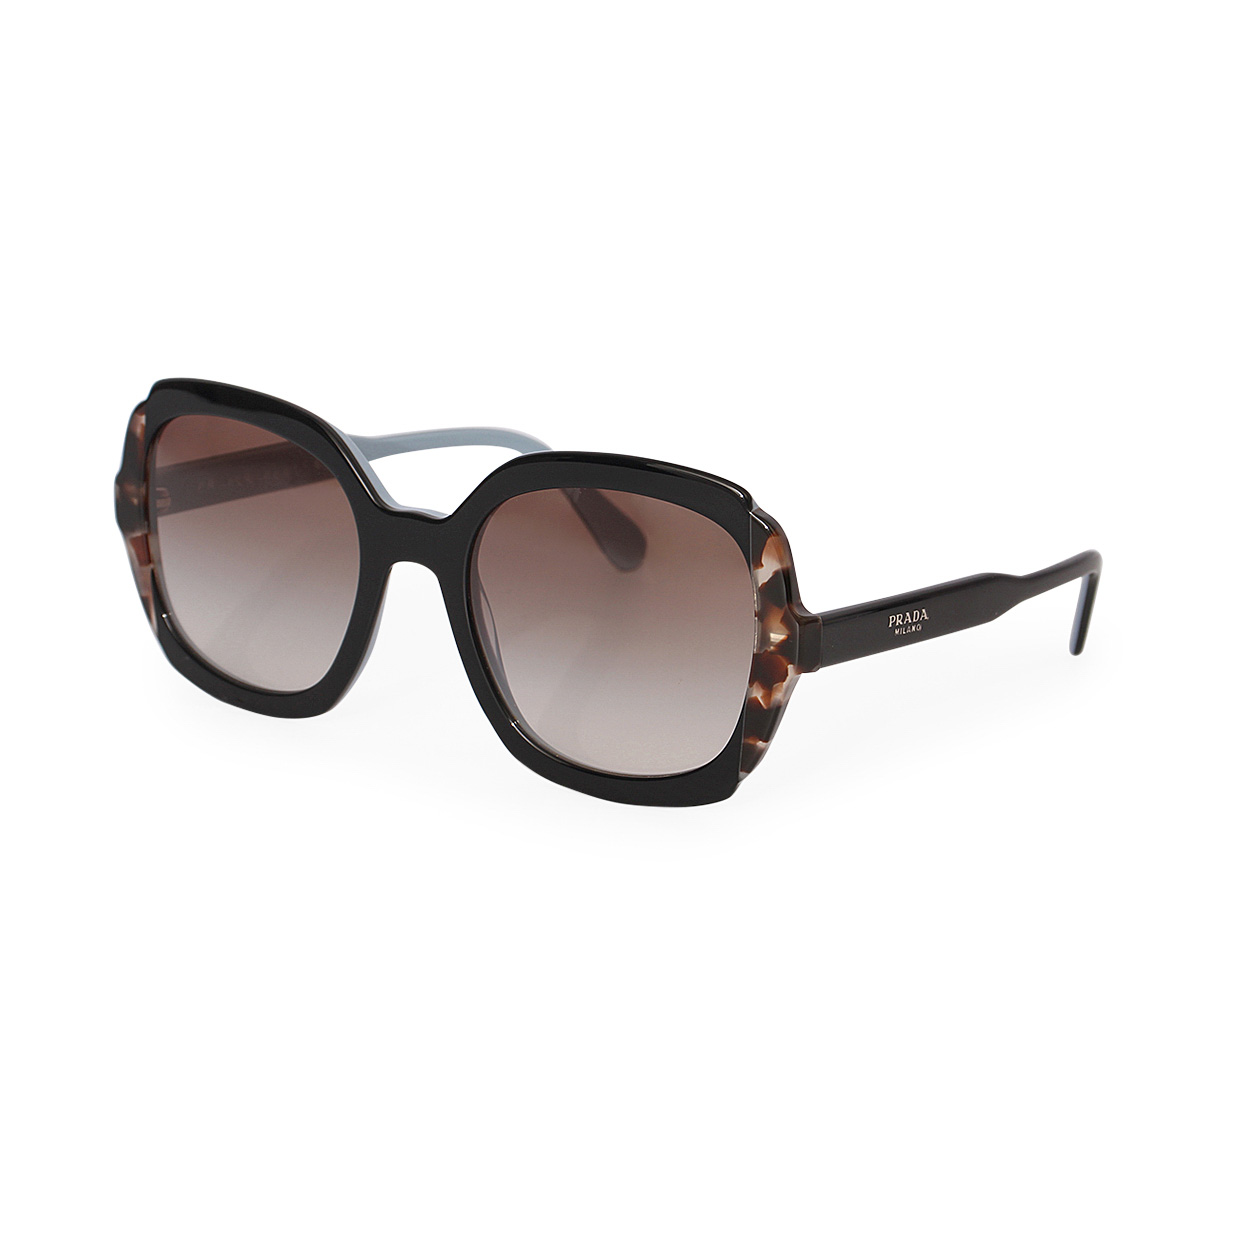 PRADA Sunglasses SPR 16U Black/Blue | Luxity